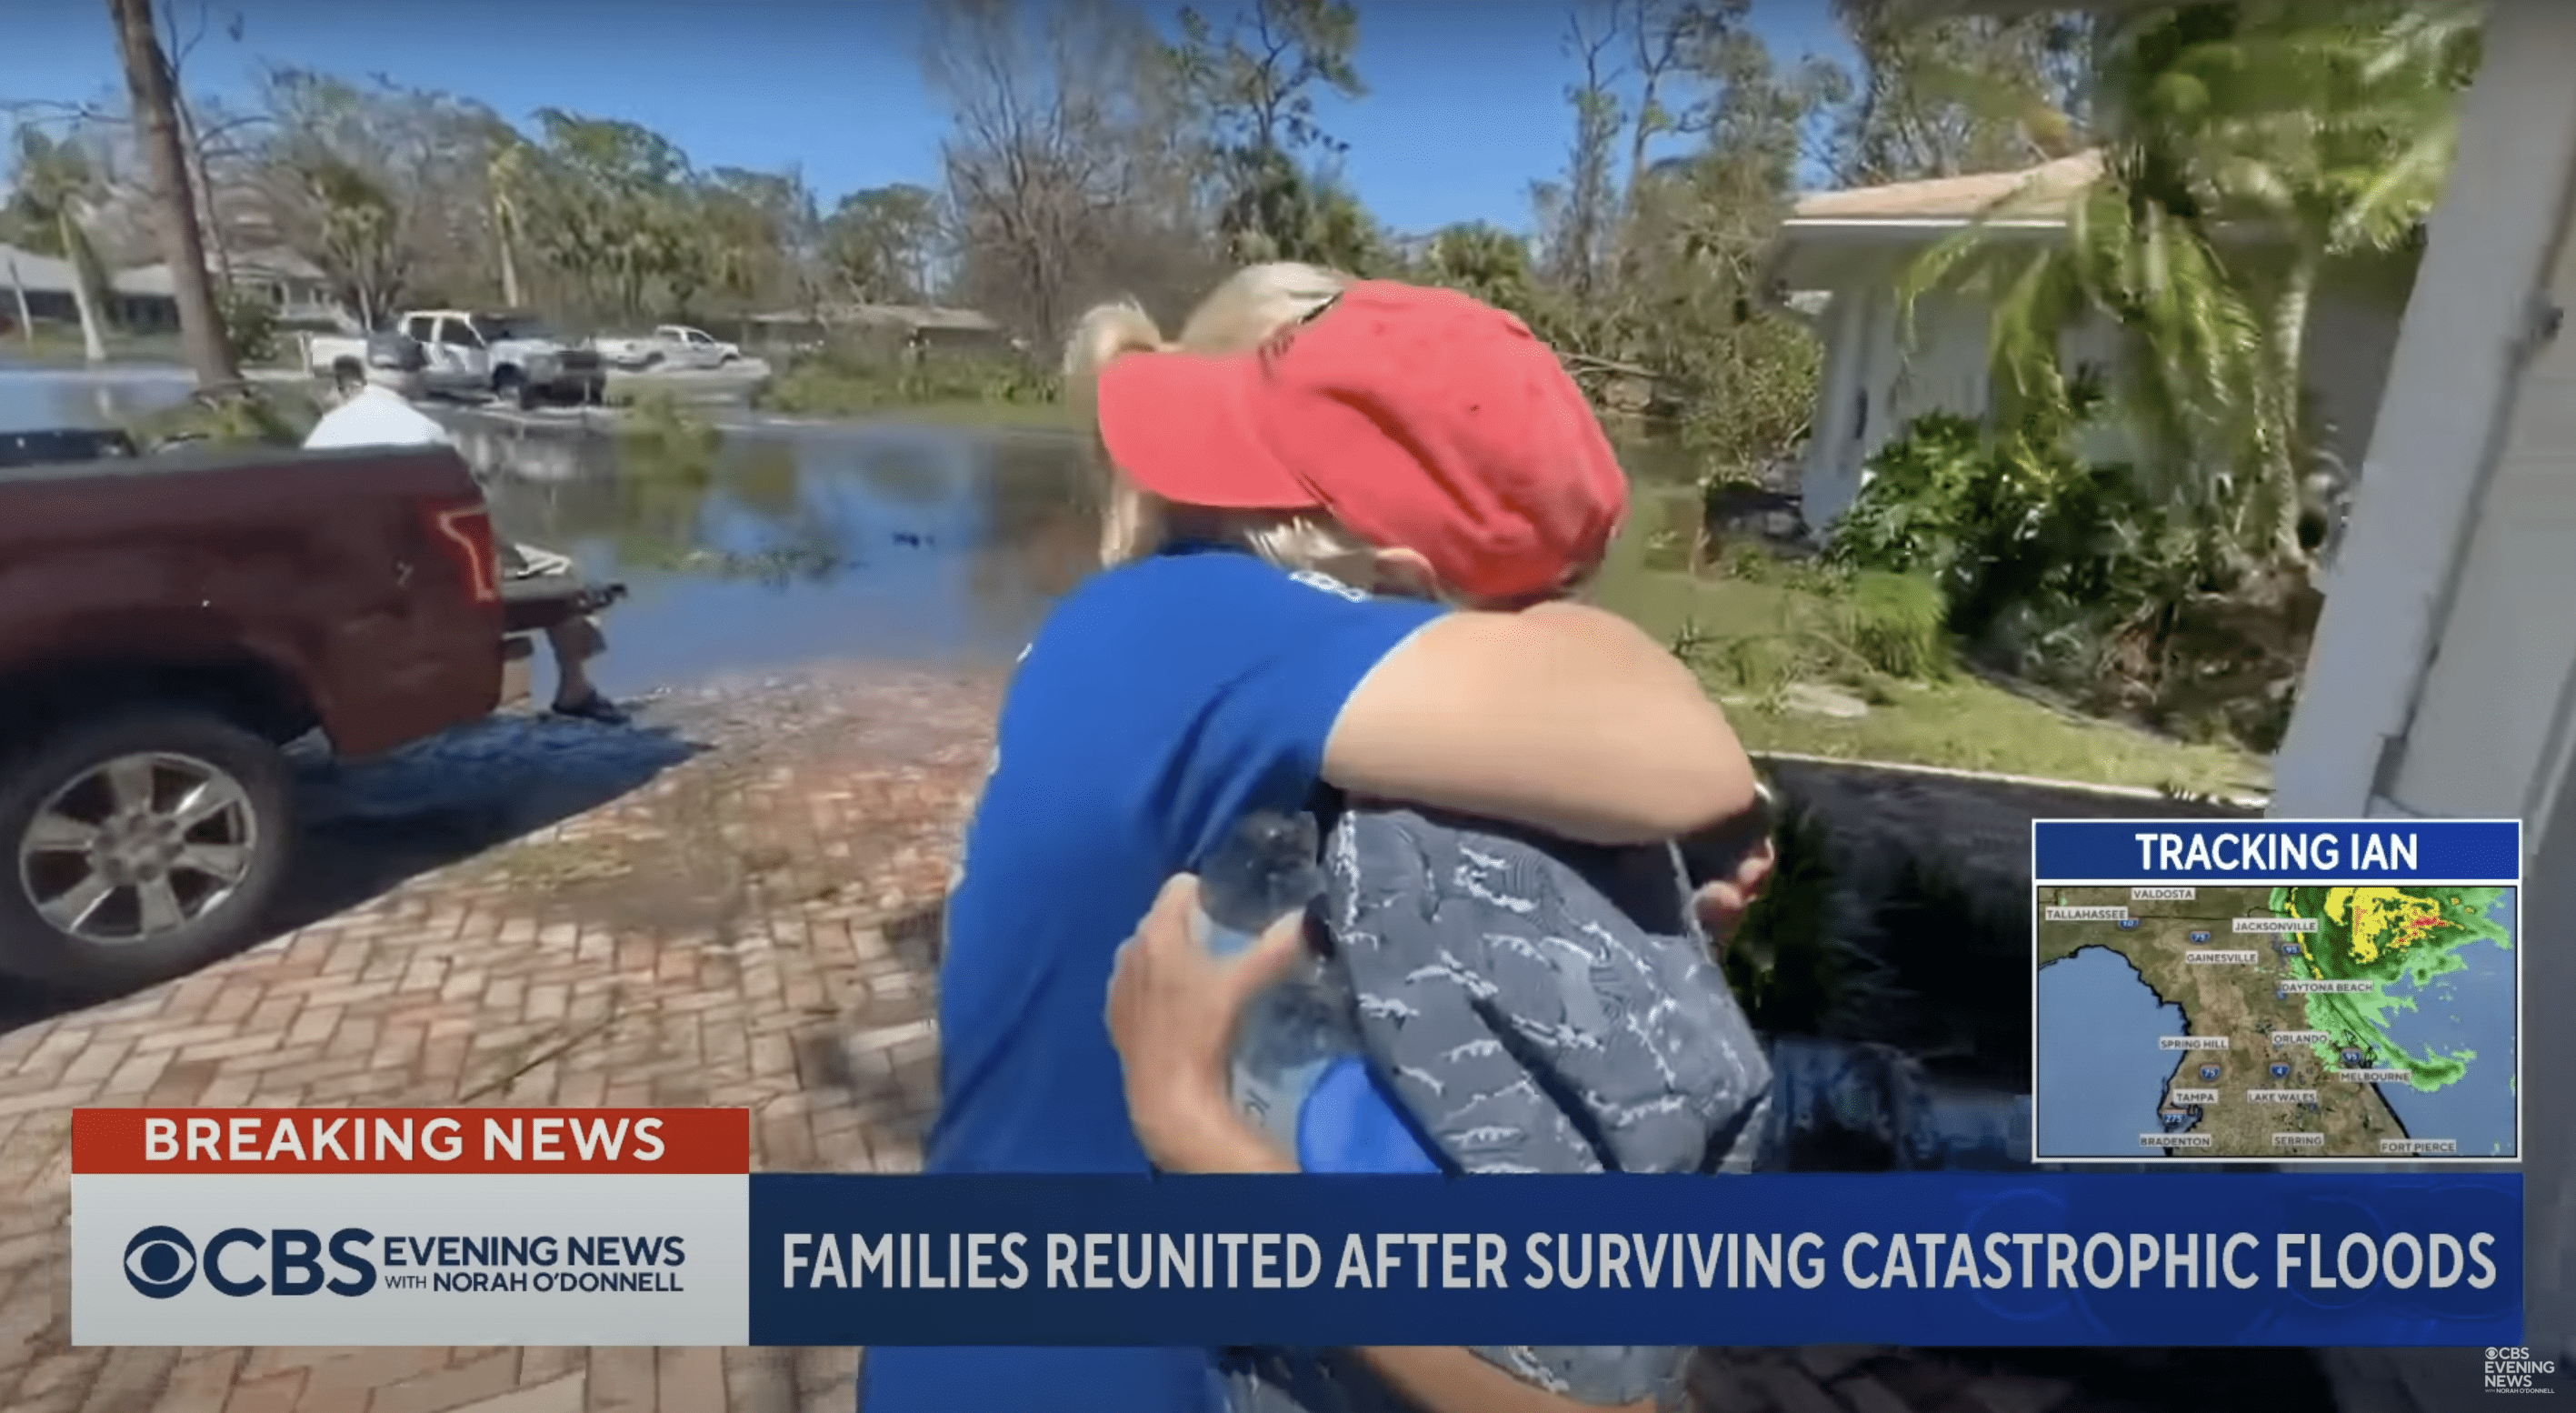 : yCecilia Donald and her daughter share an emotional hug. | Source: YouTube.com/CBS Evening News